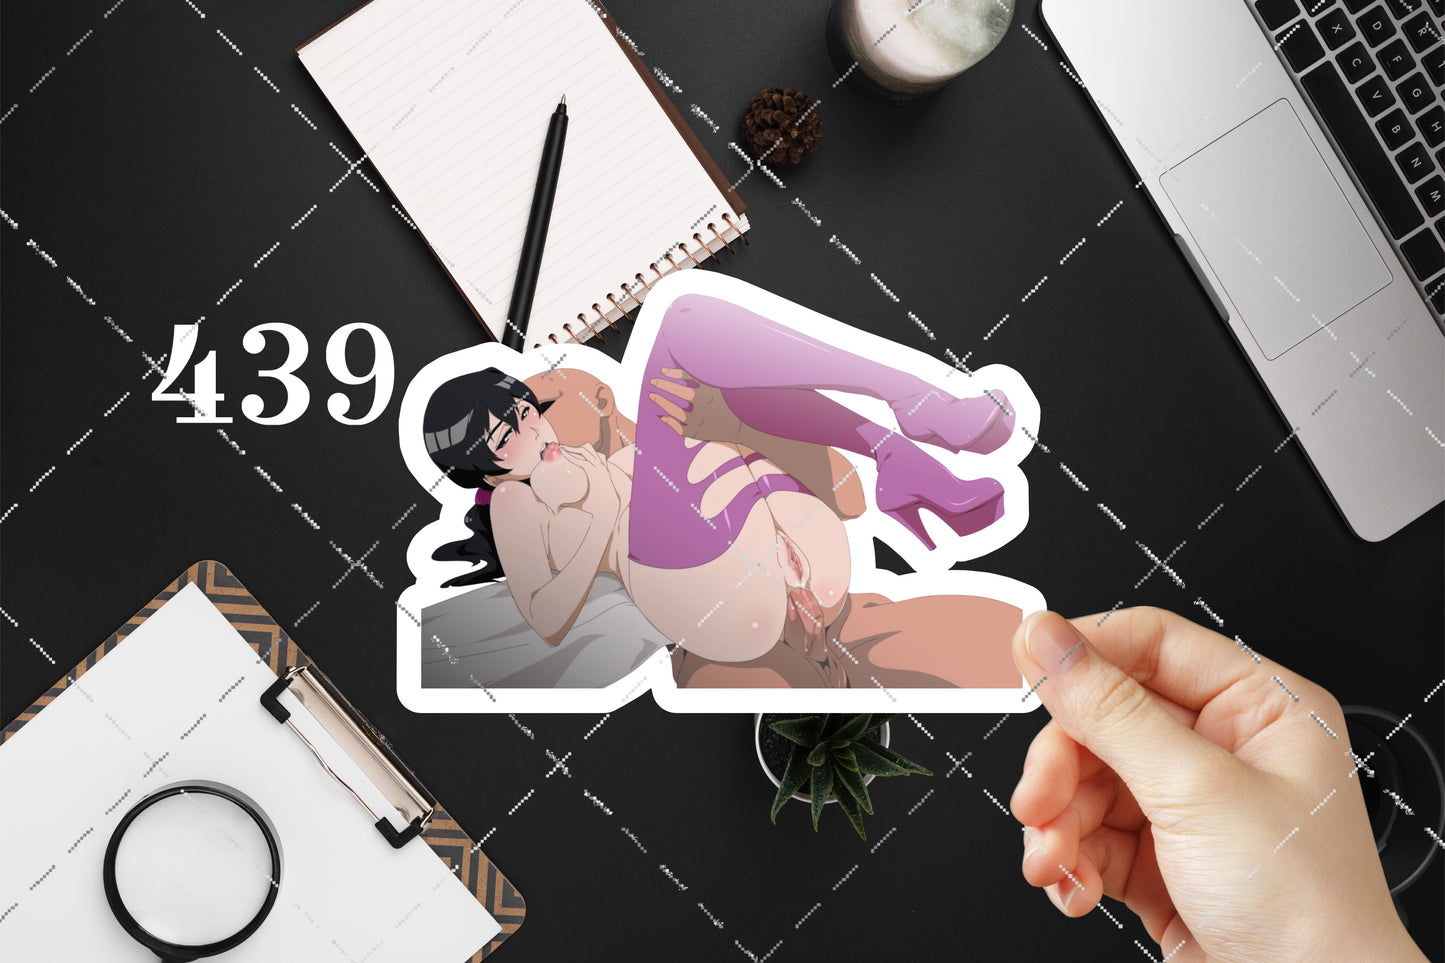 Anime vinyl sticker #439, Bleach, Unagiya